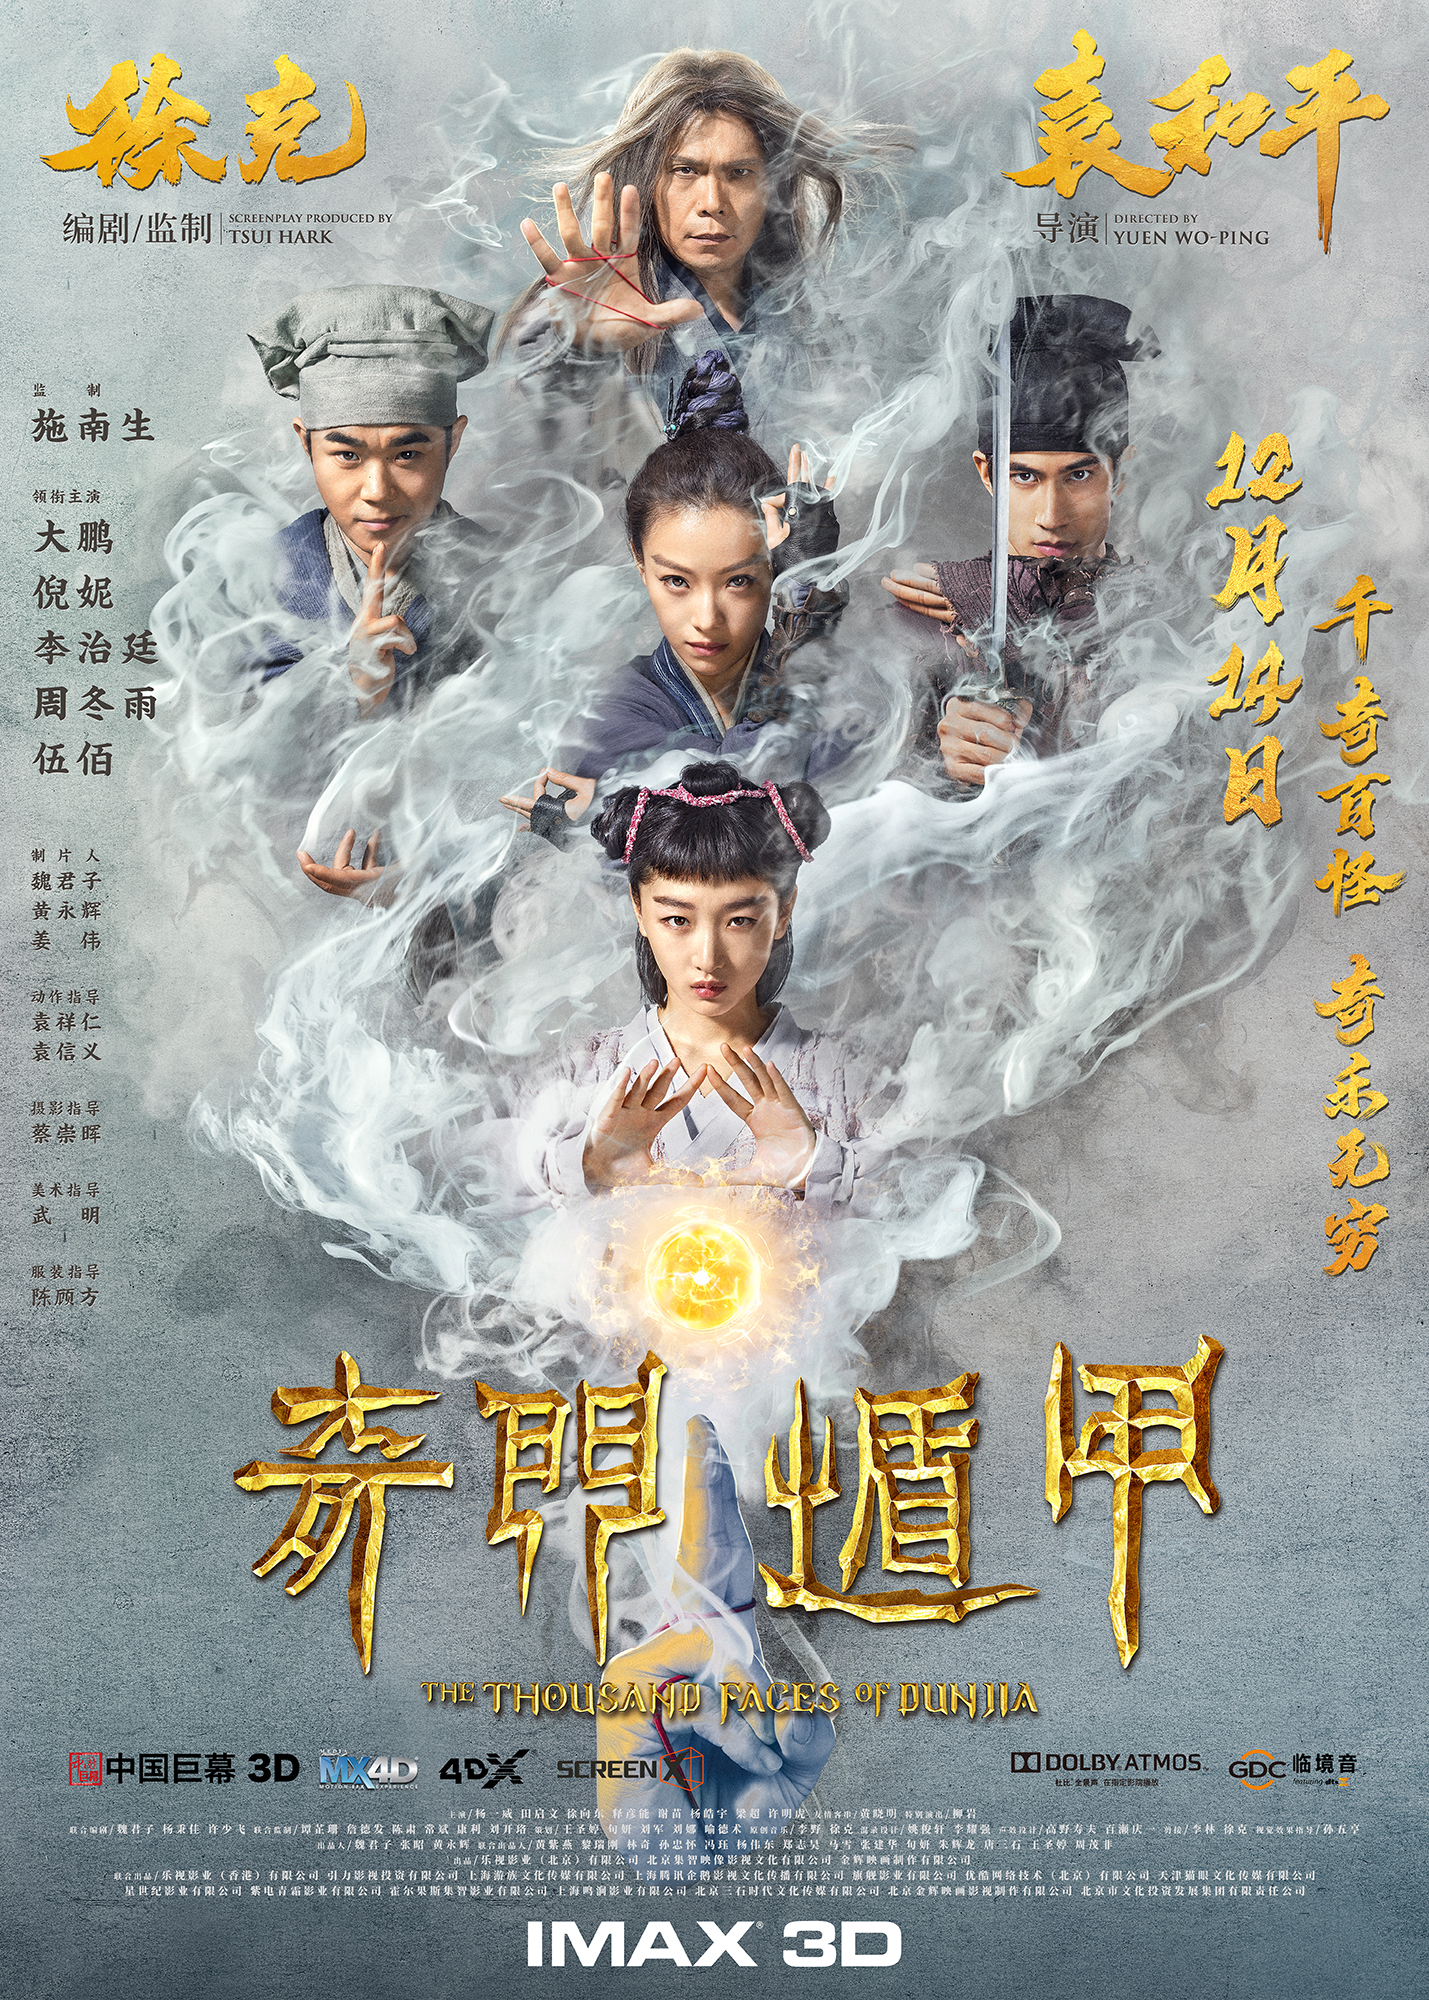 奇门遁甲 - The Thousand Faces of Dun jia